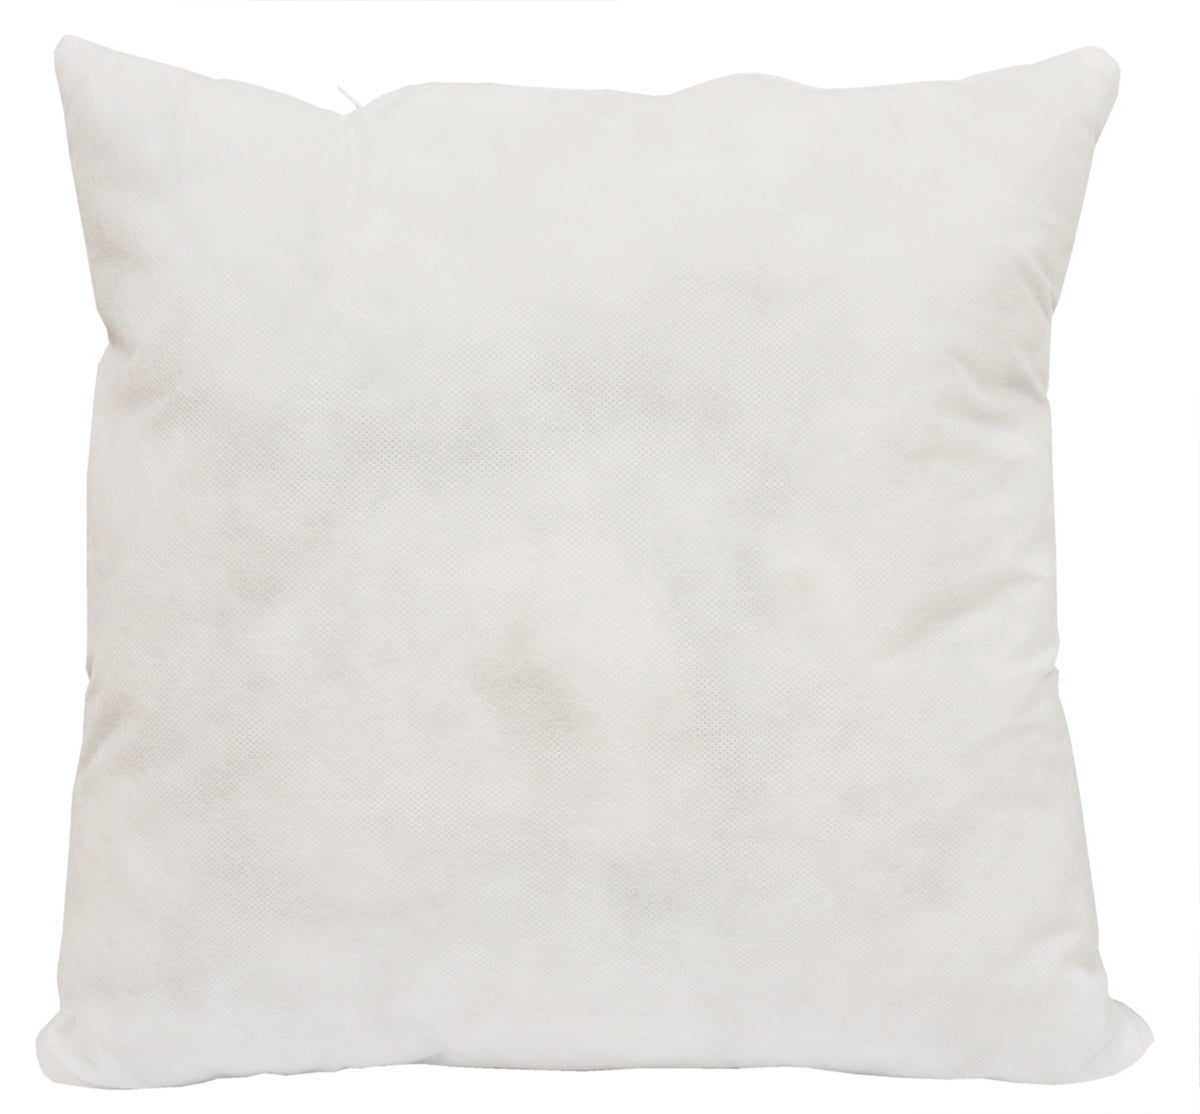 Poly-Fil® Premier™ Accent Pillow Insert 18 x 18 - Fairfield World Shop